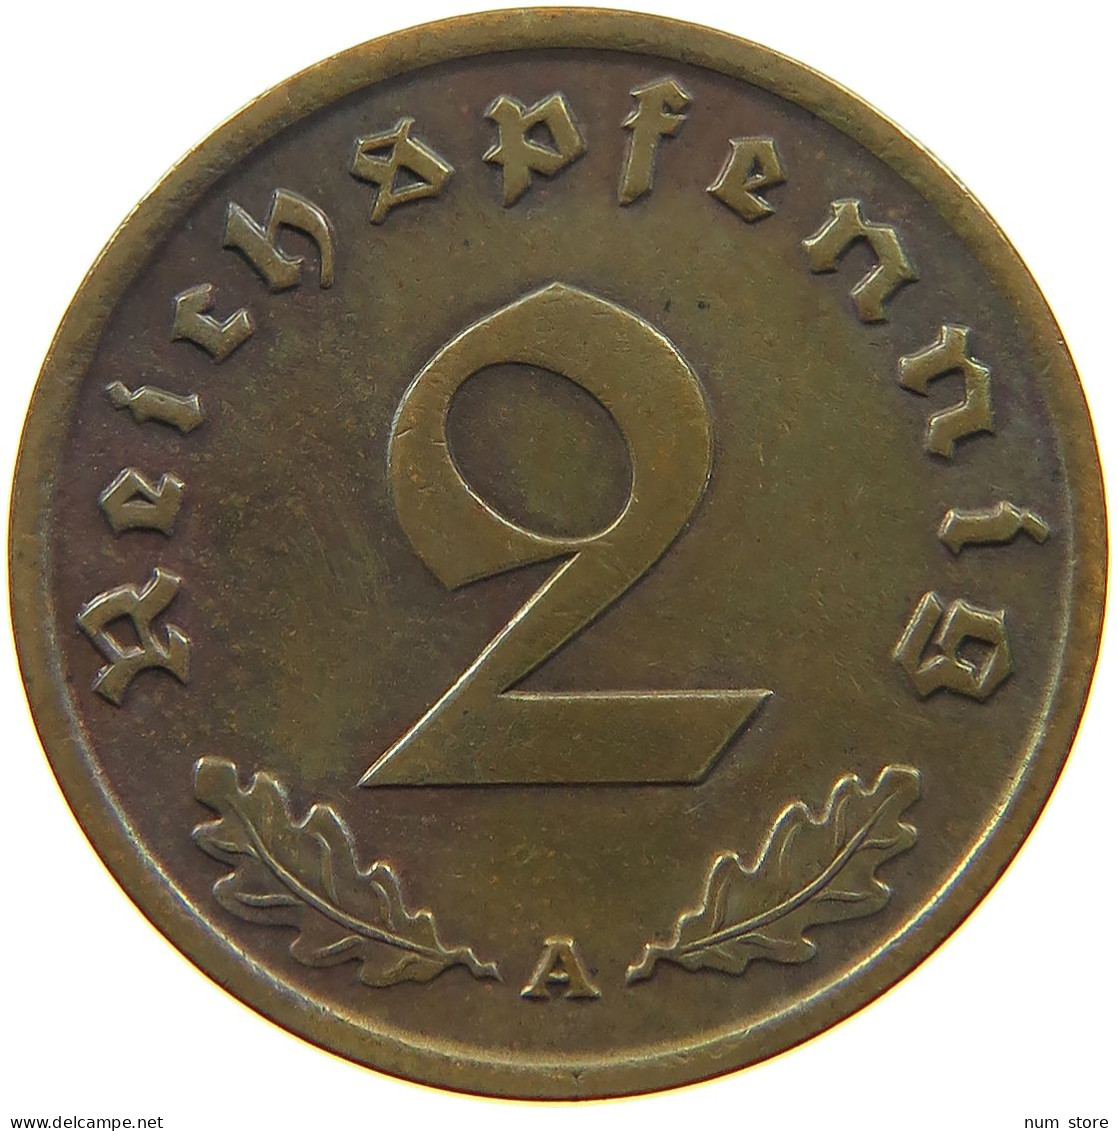 GERMANY 2 PFENNIG 1937 A #c081 0291 - 2 Reichspfennig